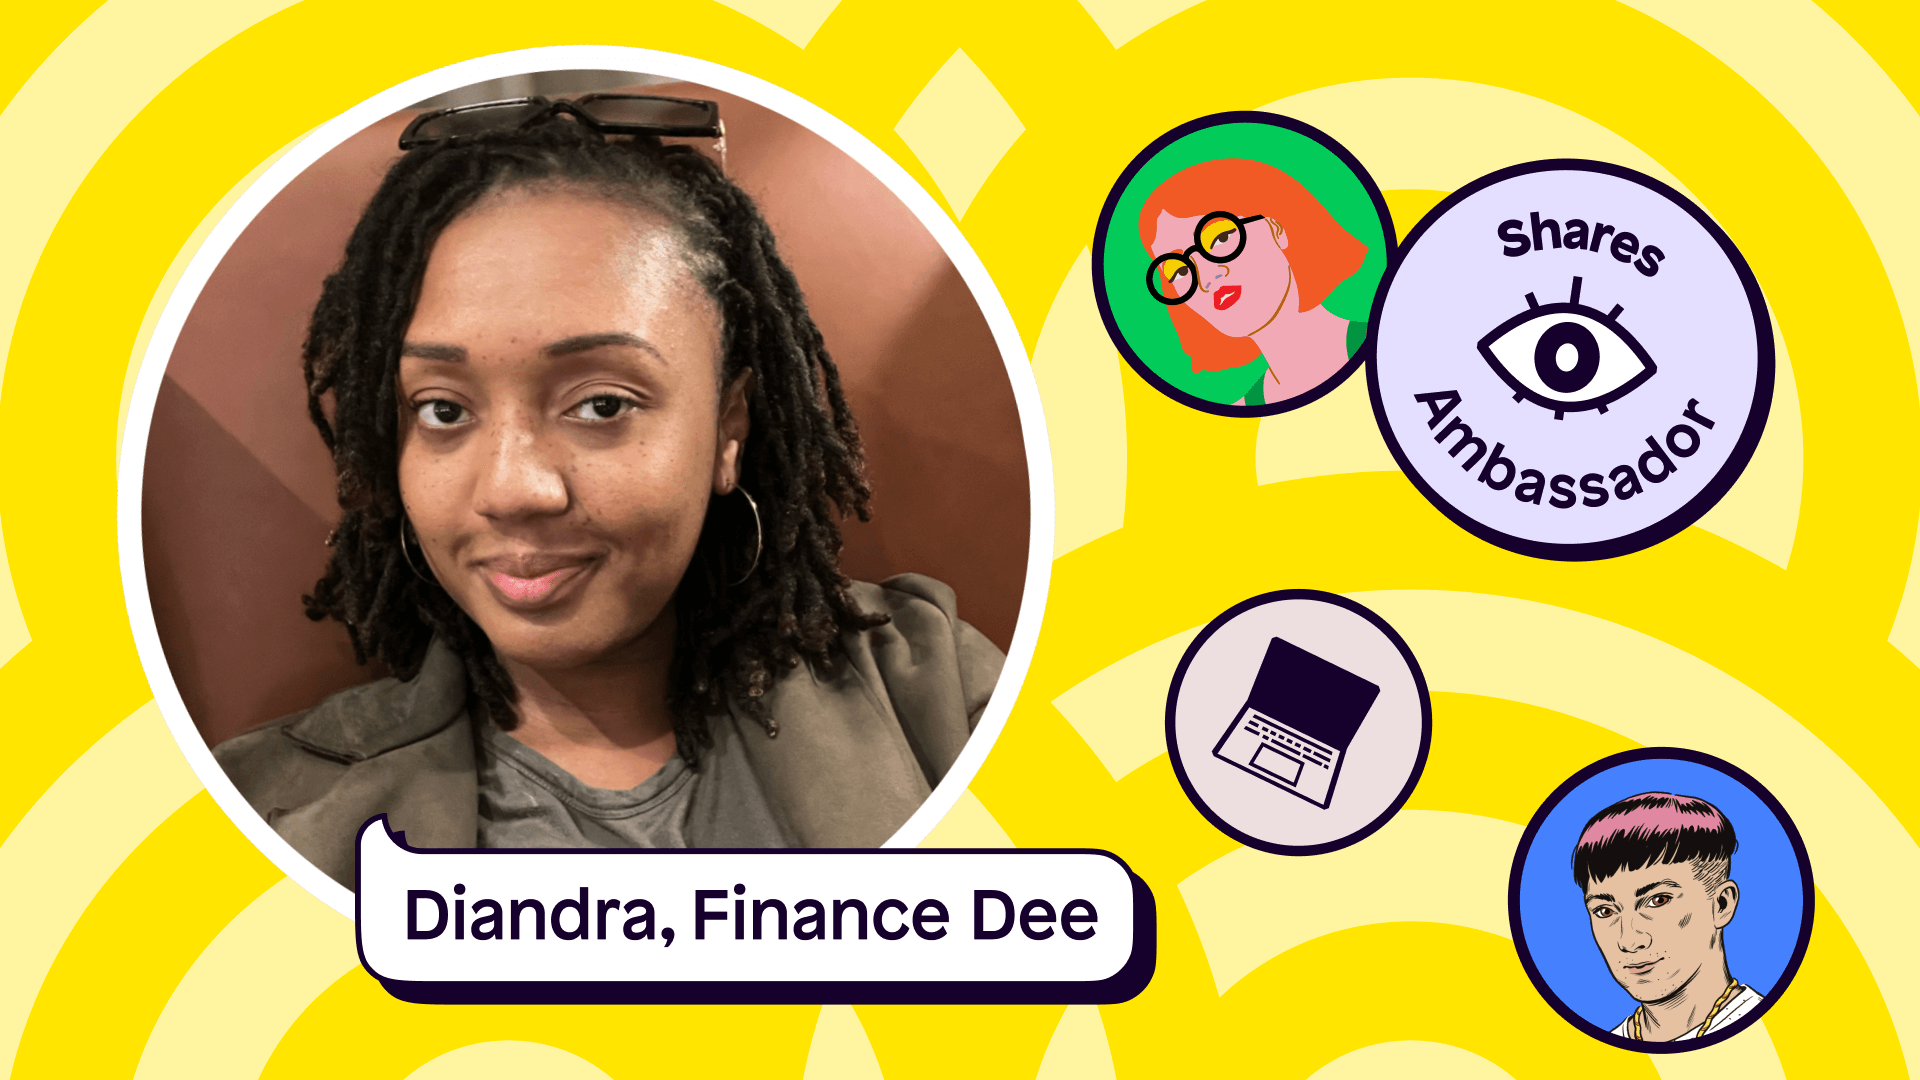 Diandra, Finance Dee and Shares